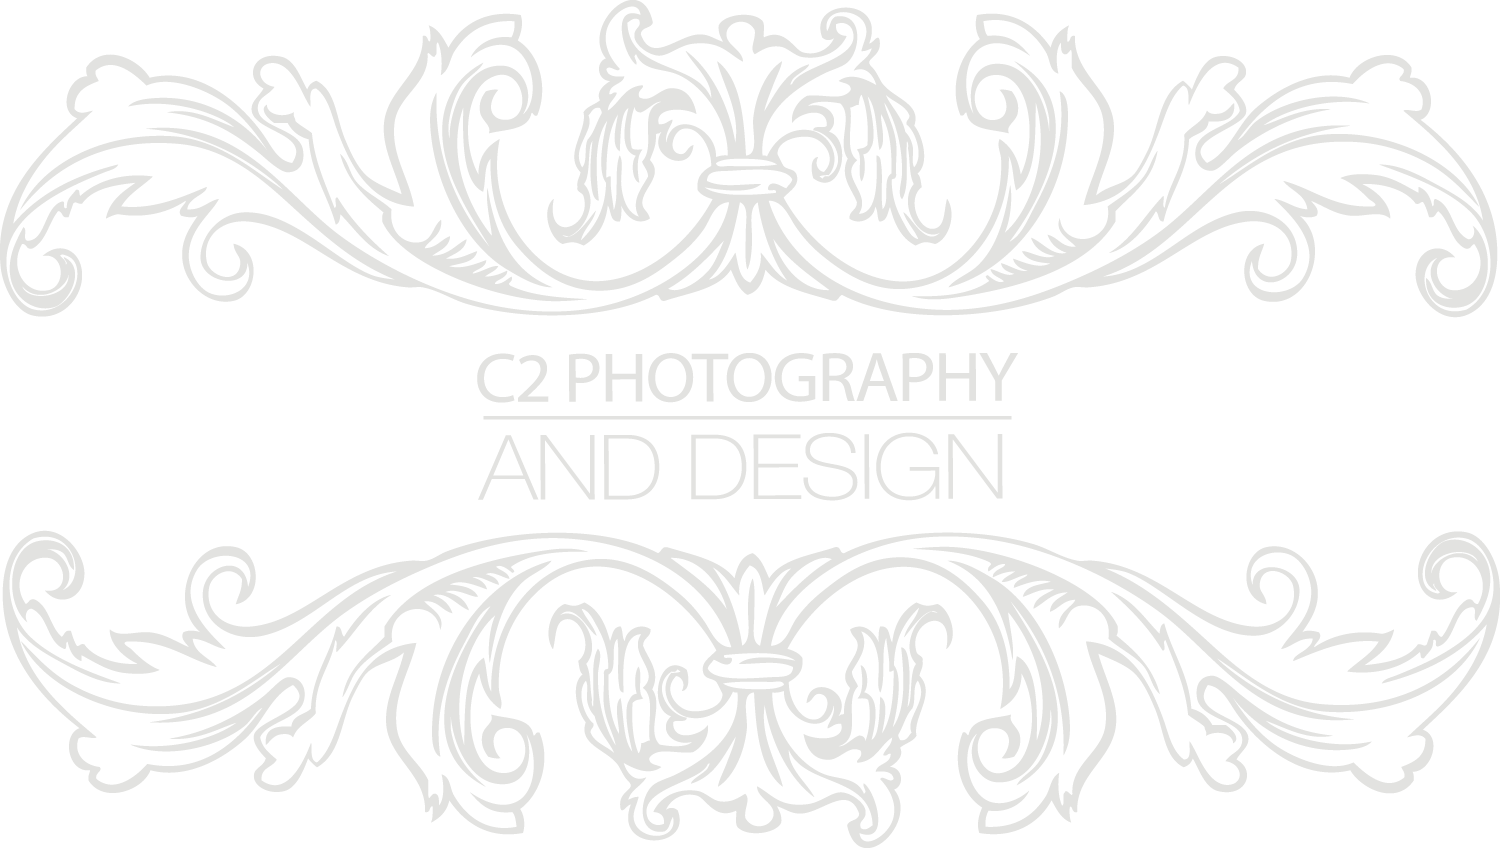 C2 Photography